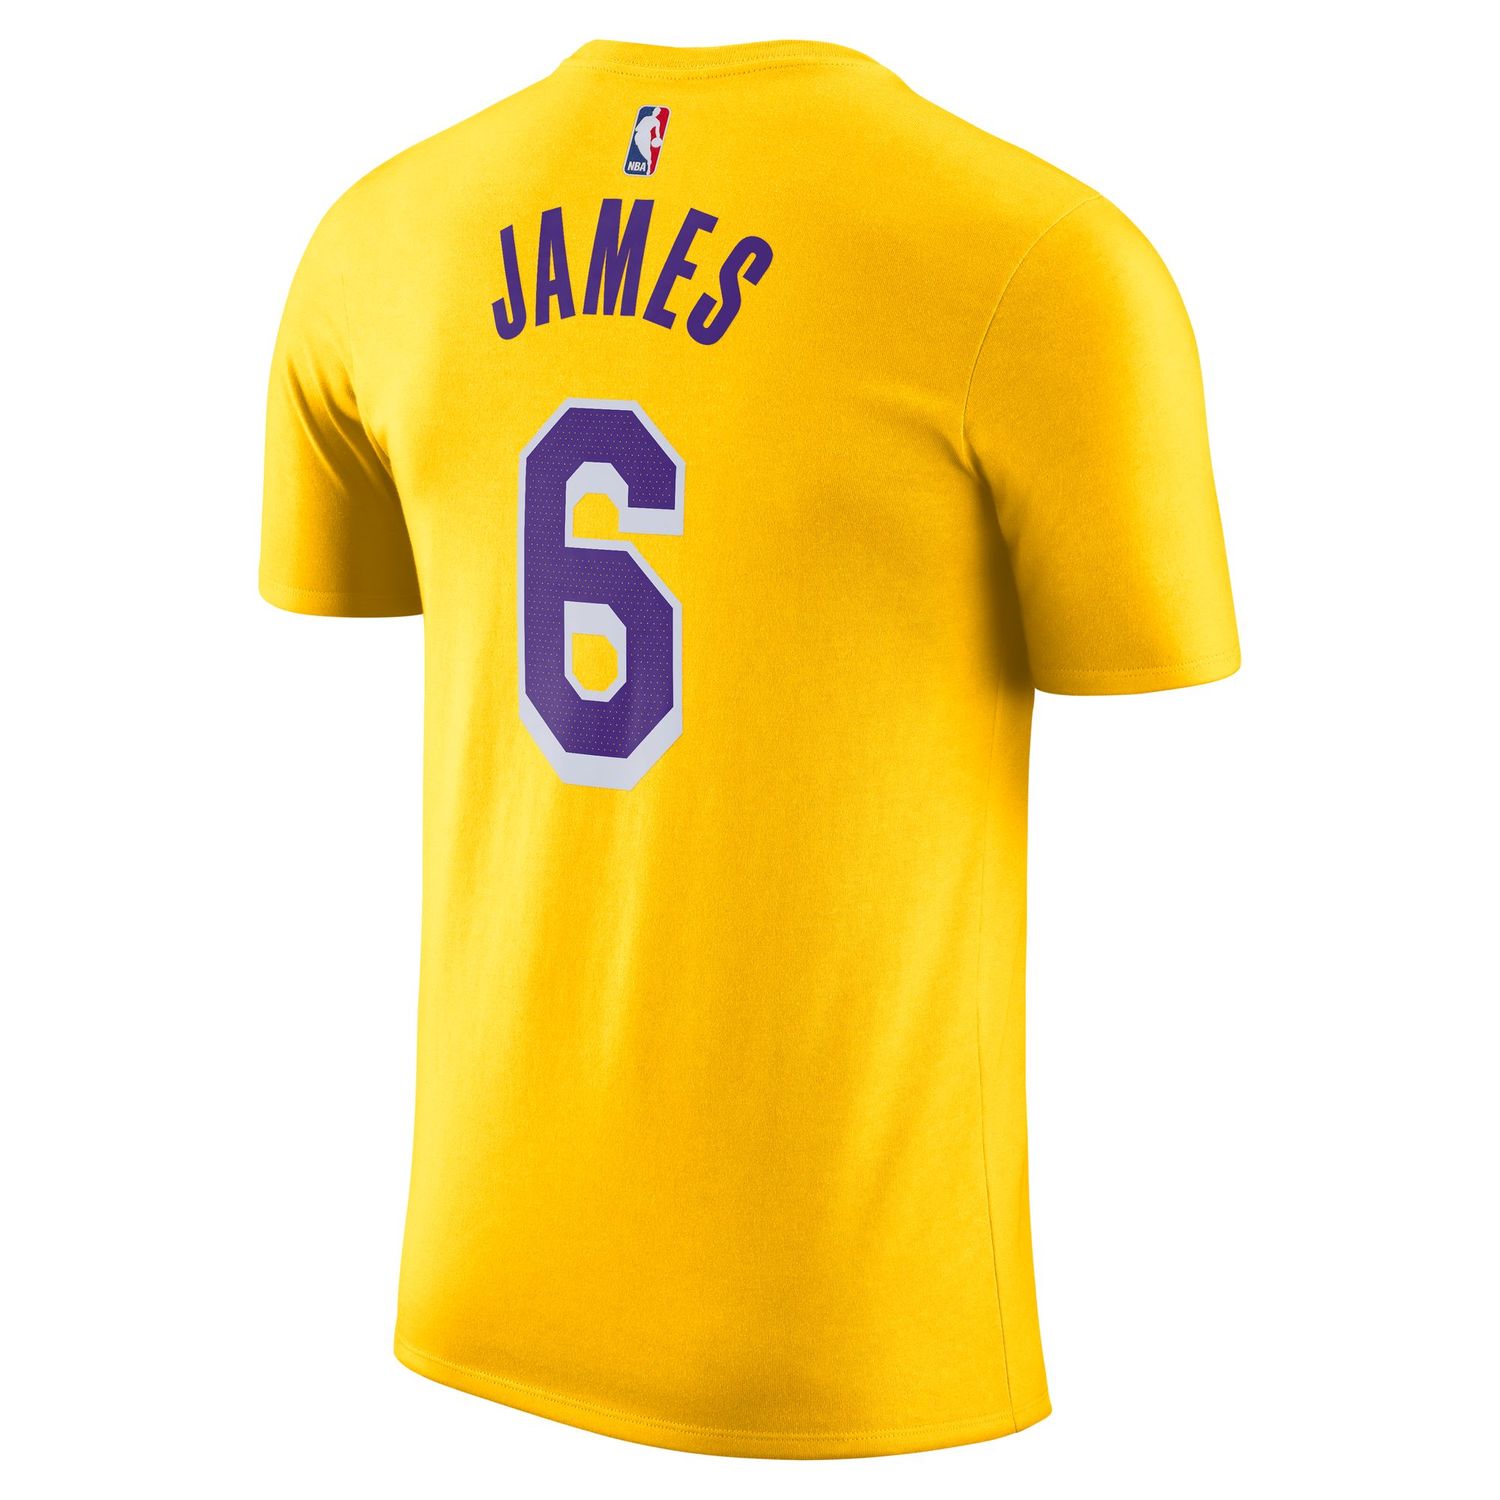 Nike Lebron James NBA T-Shirt